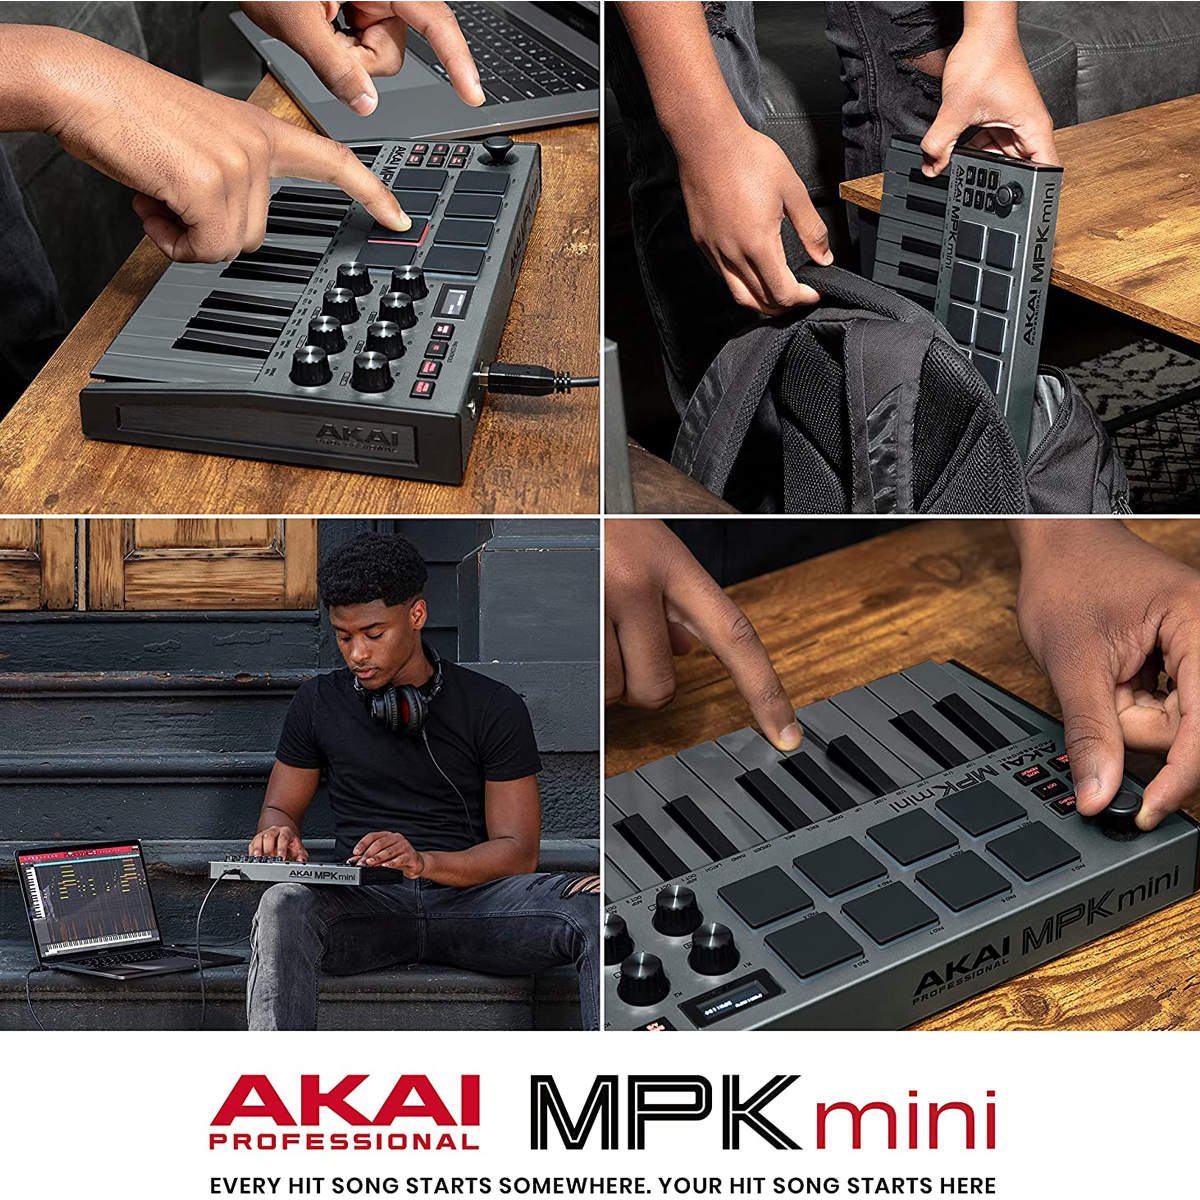 AKAI MPK mini specifications